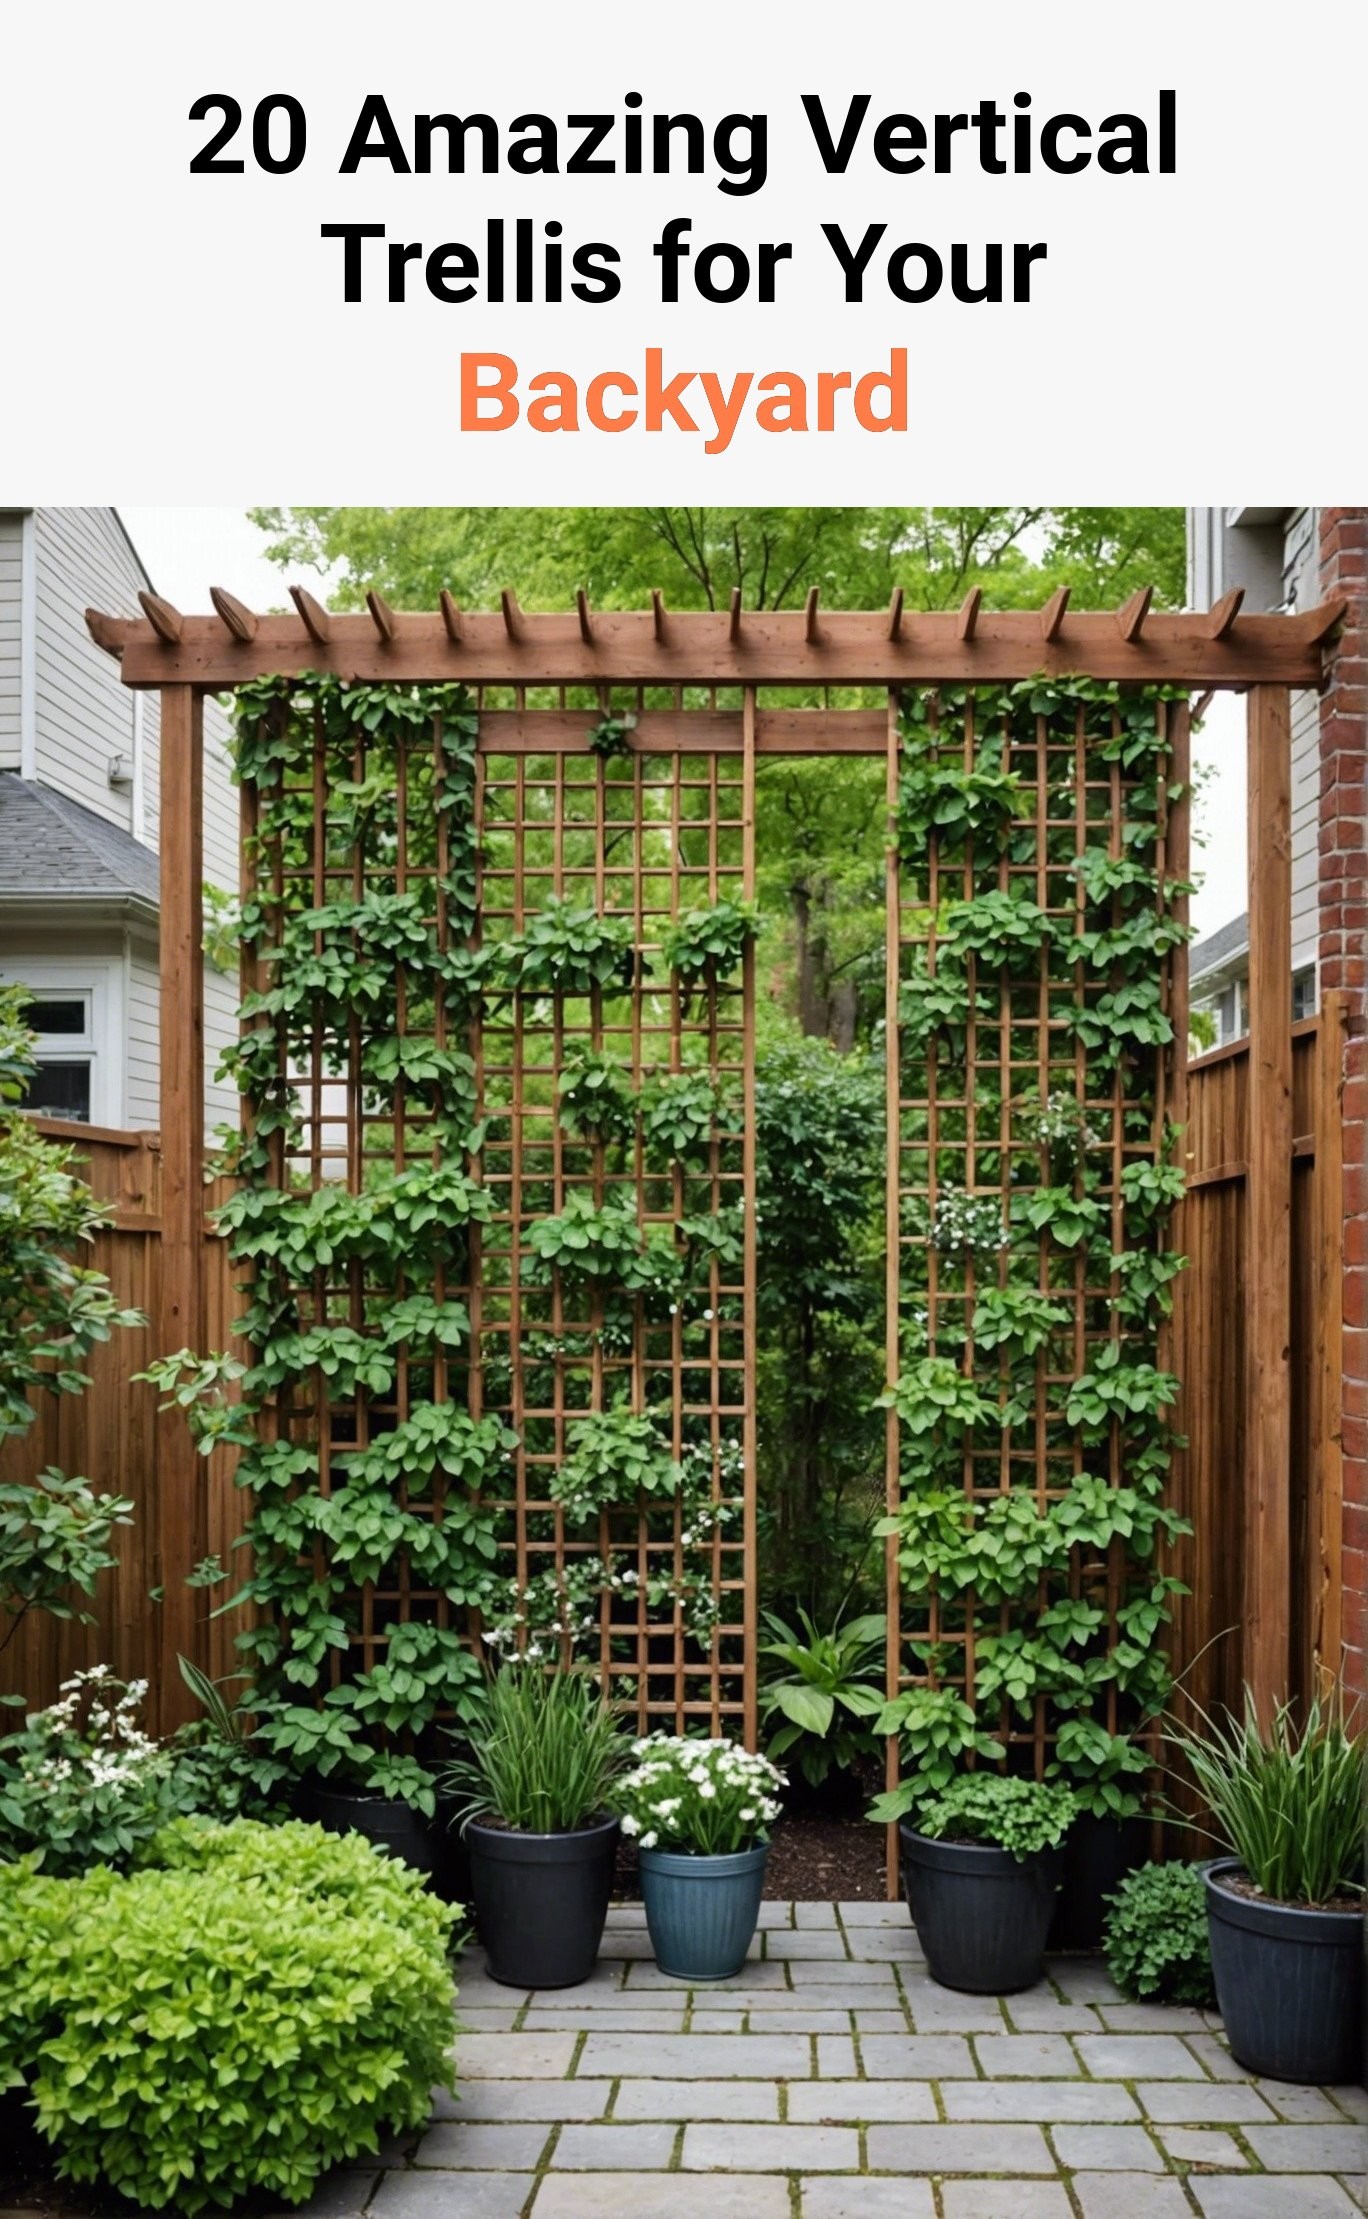 20 Amazing Vertical Trellis for Your Backyard